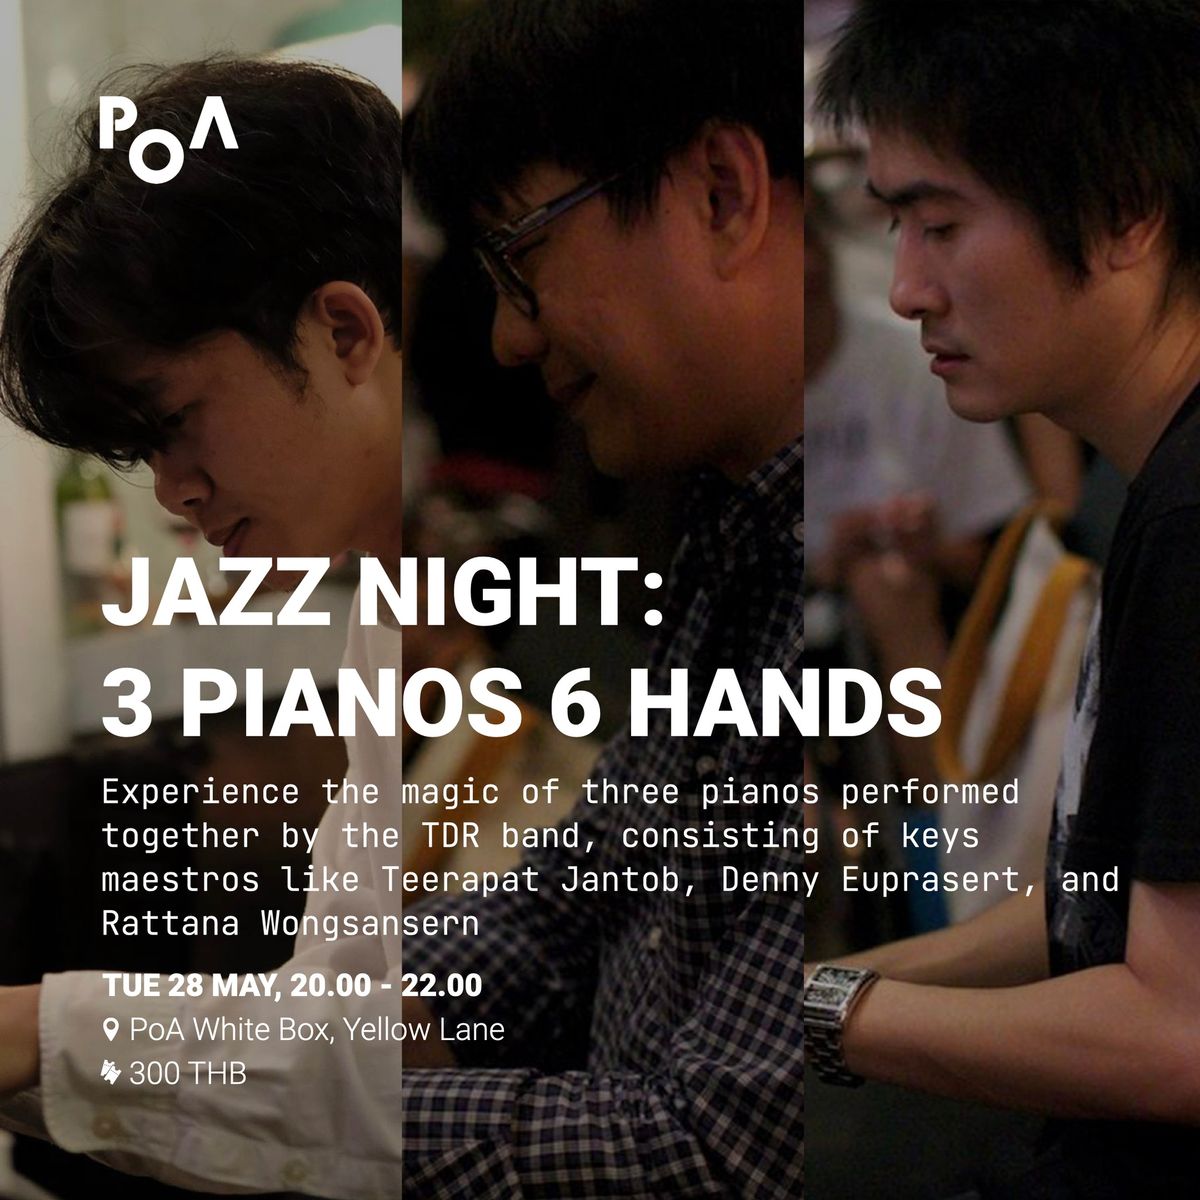 JAZZ NIGHY: 3 PIANOS 6 HANDS